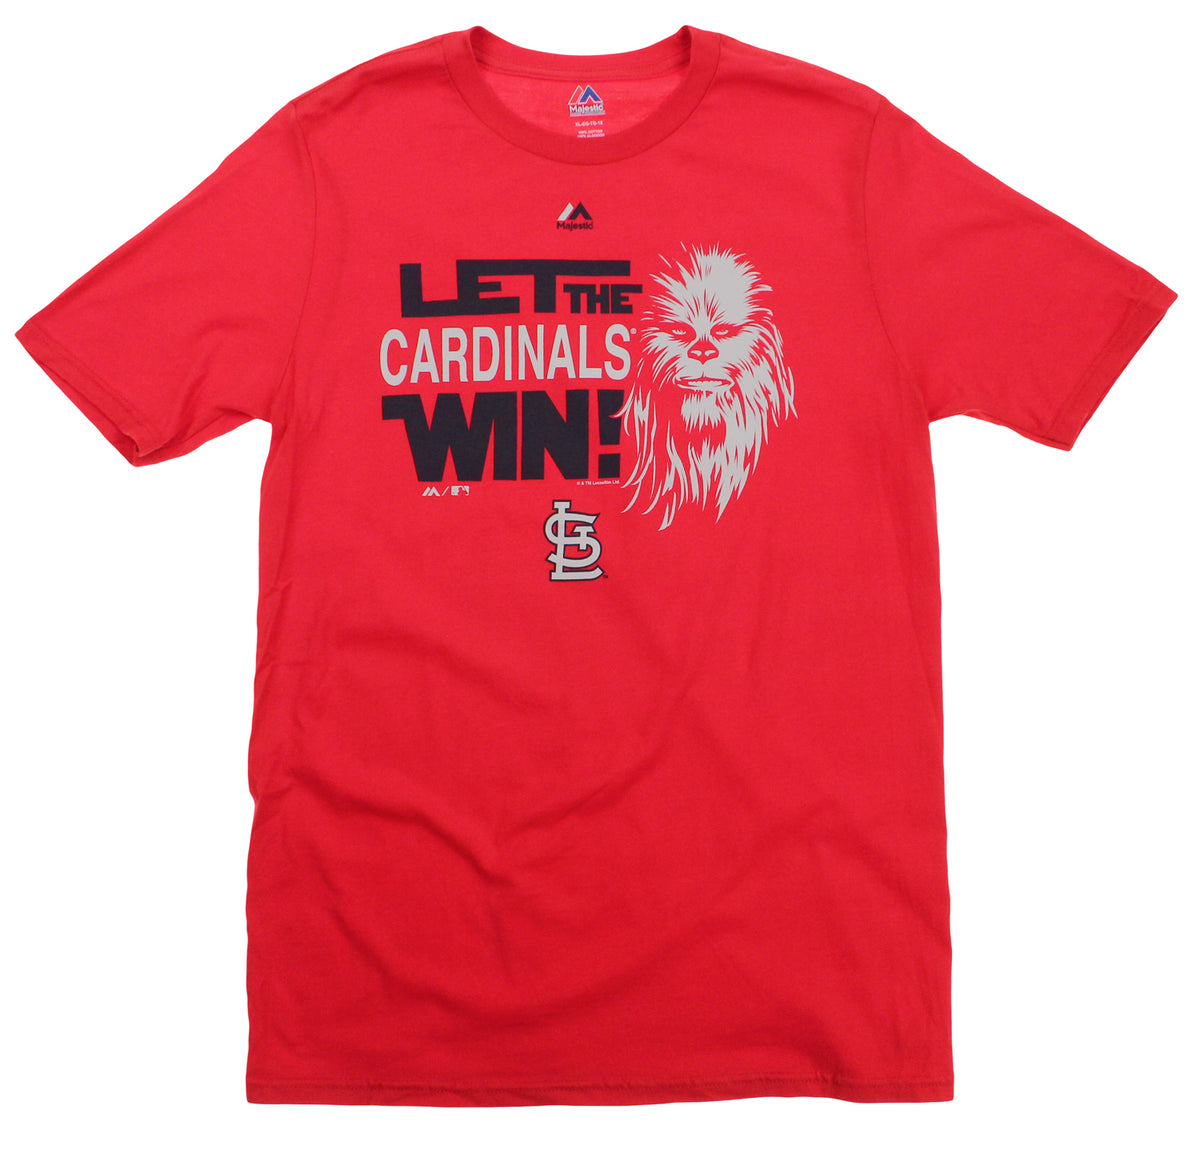 MLB St. Louis Cardinals Star Wars Main Character T-Shirt, Black Size XL